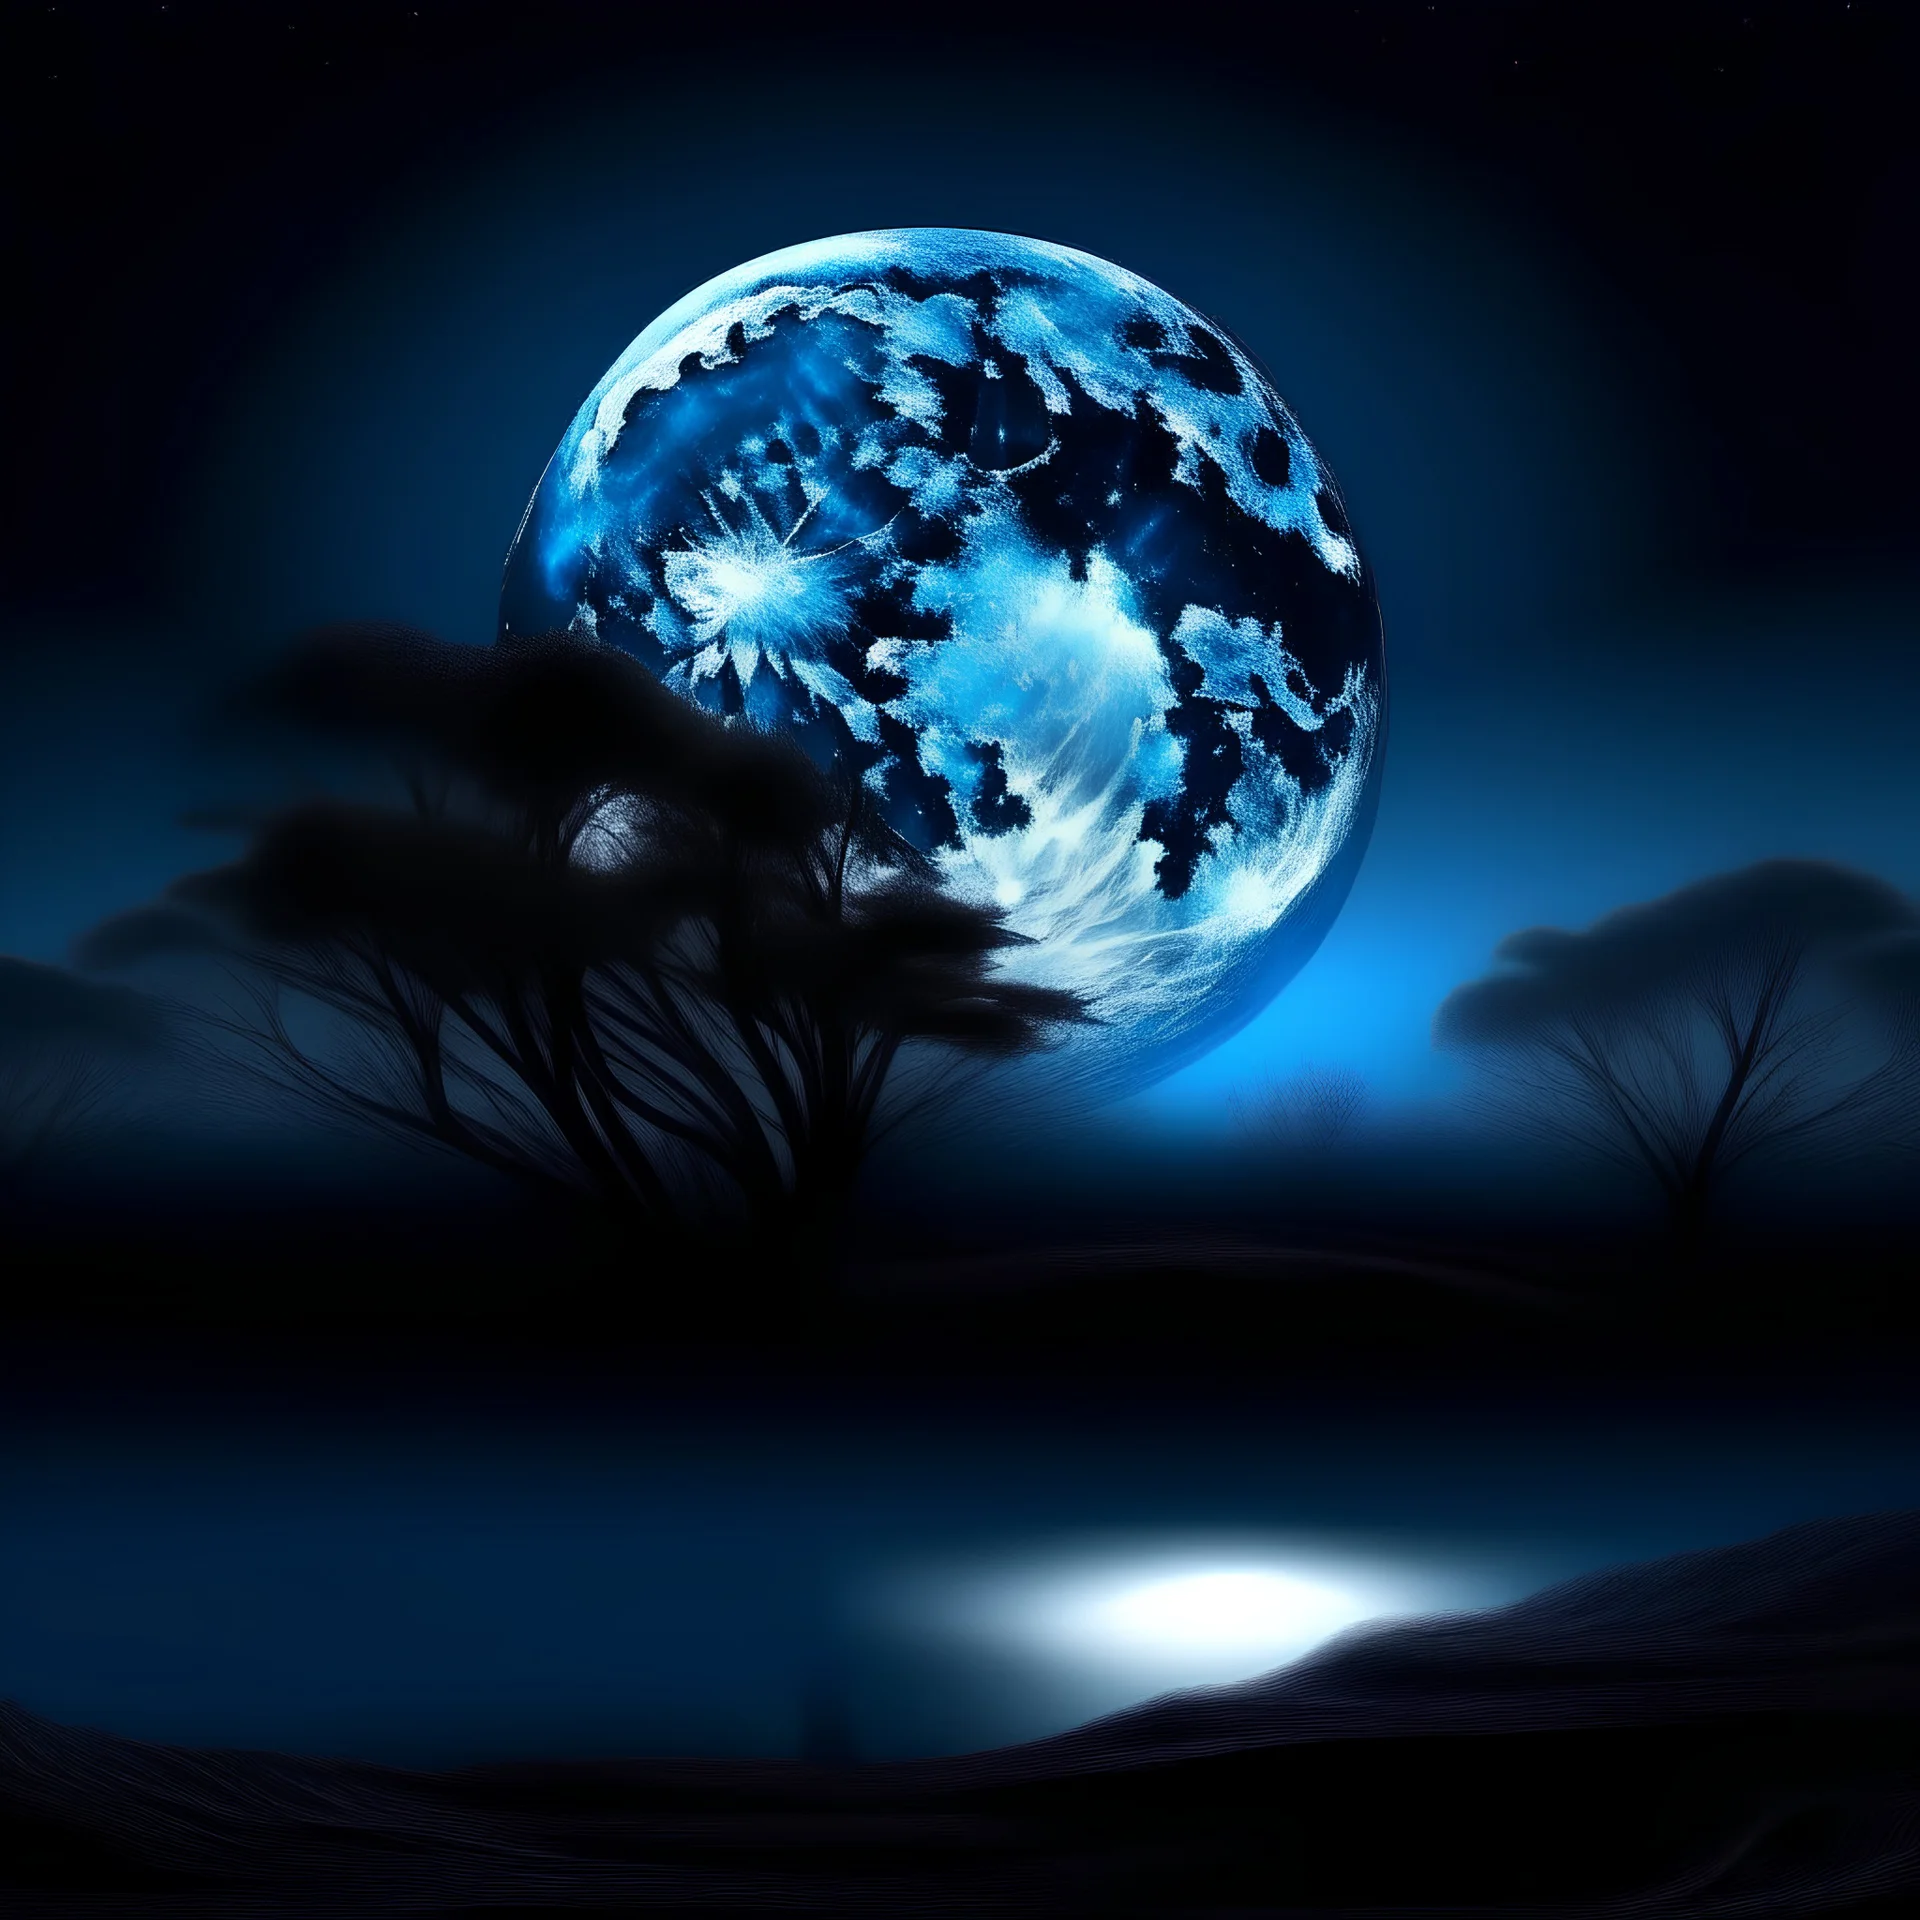 Style edge blue tones night moon